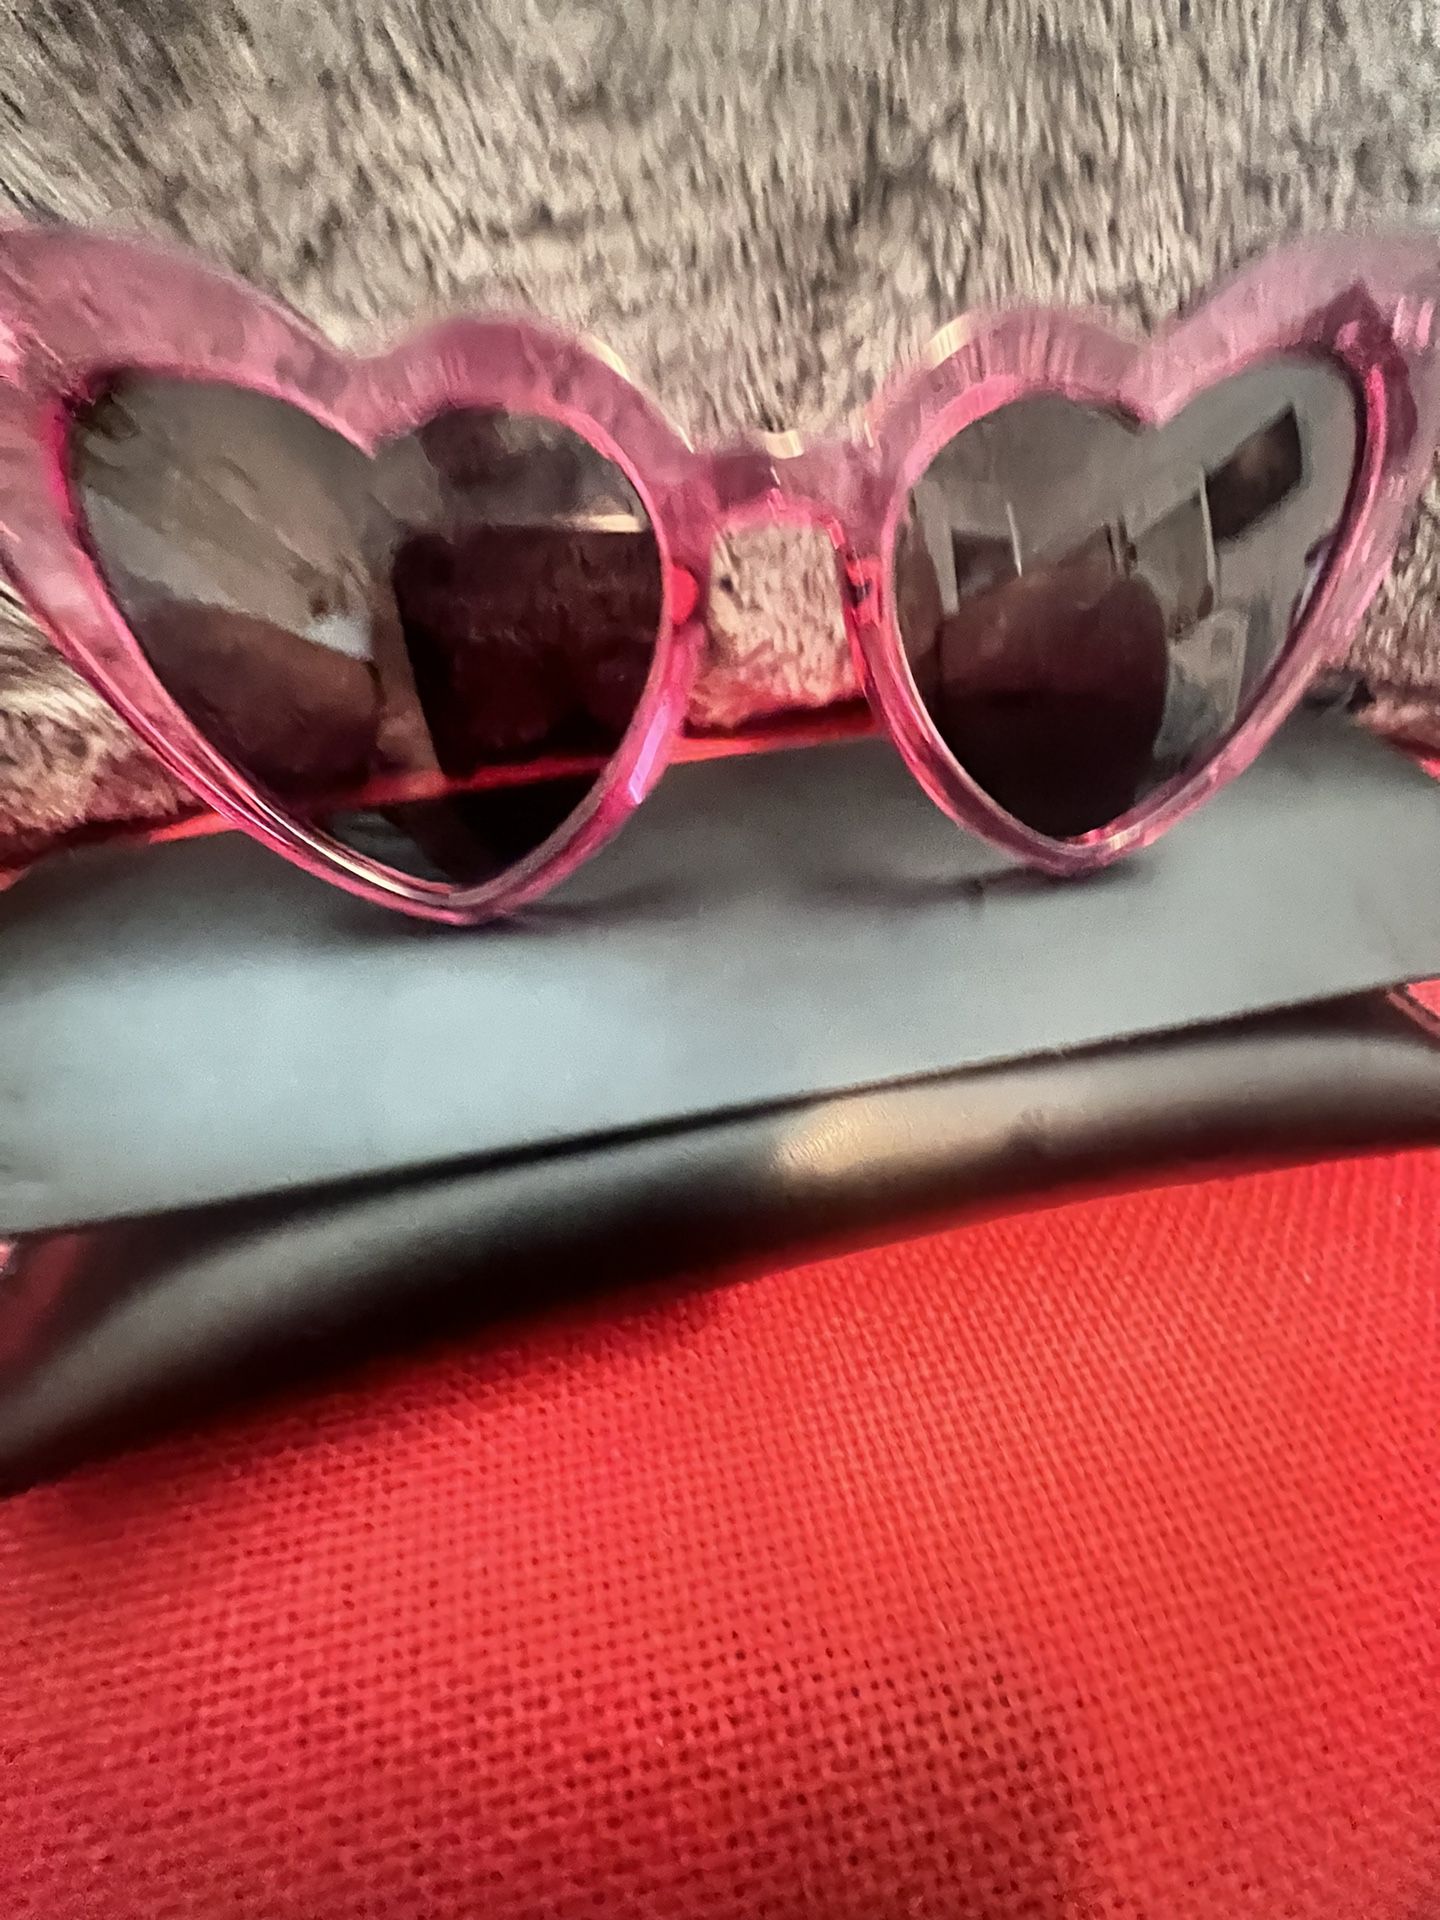 Saint Laurent Loulou Sunglasses